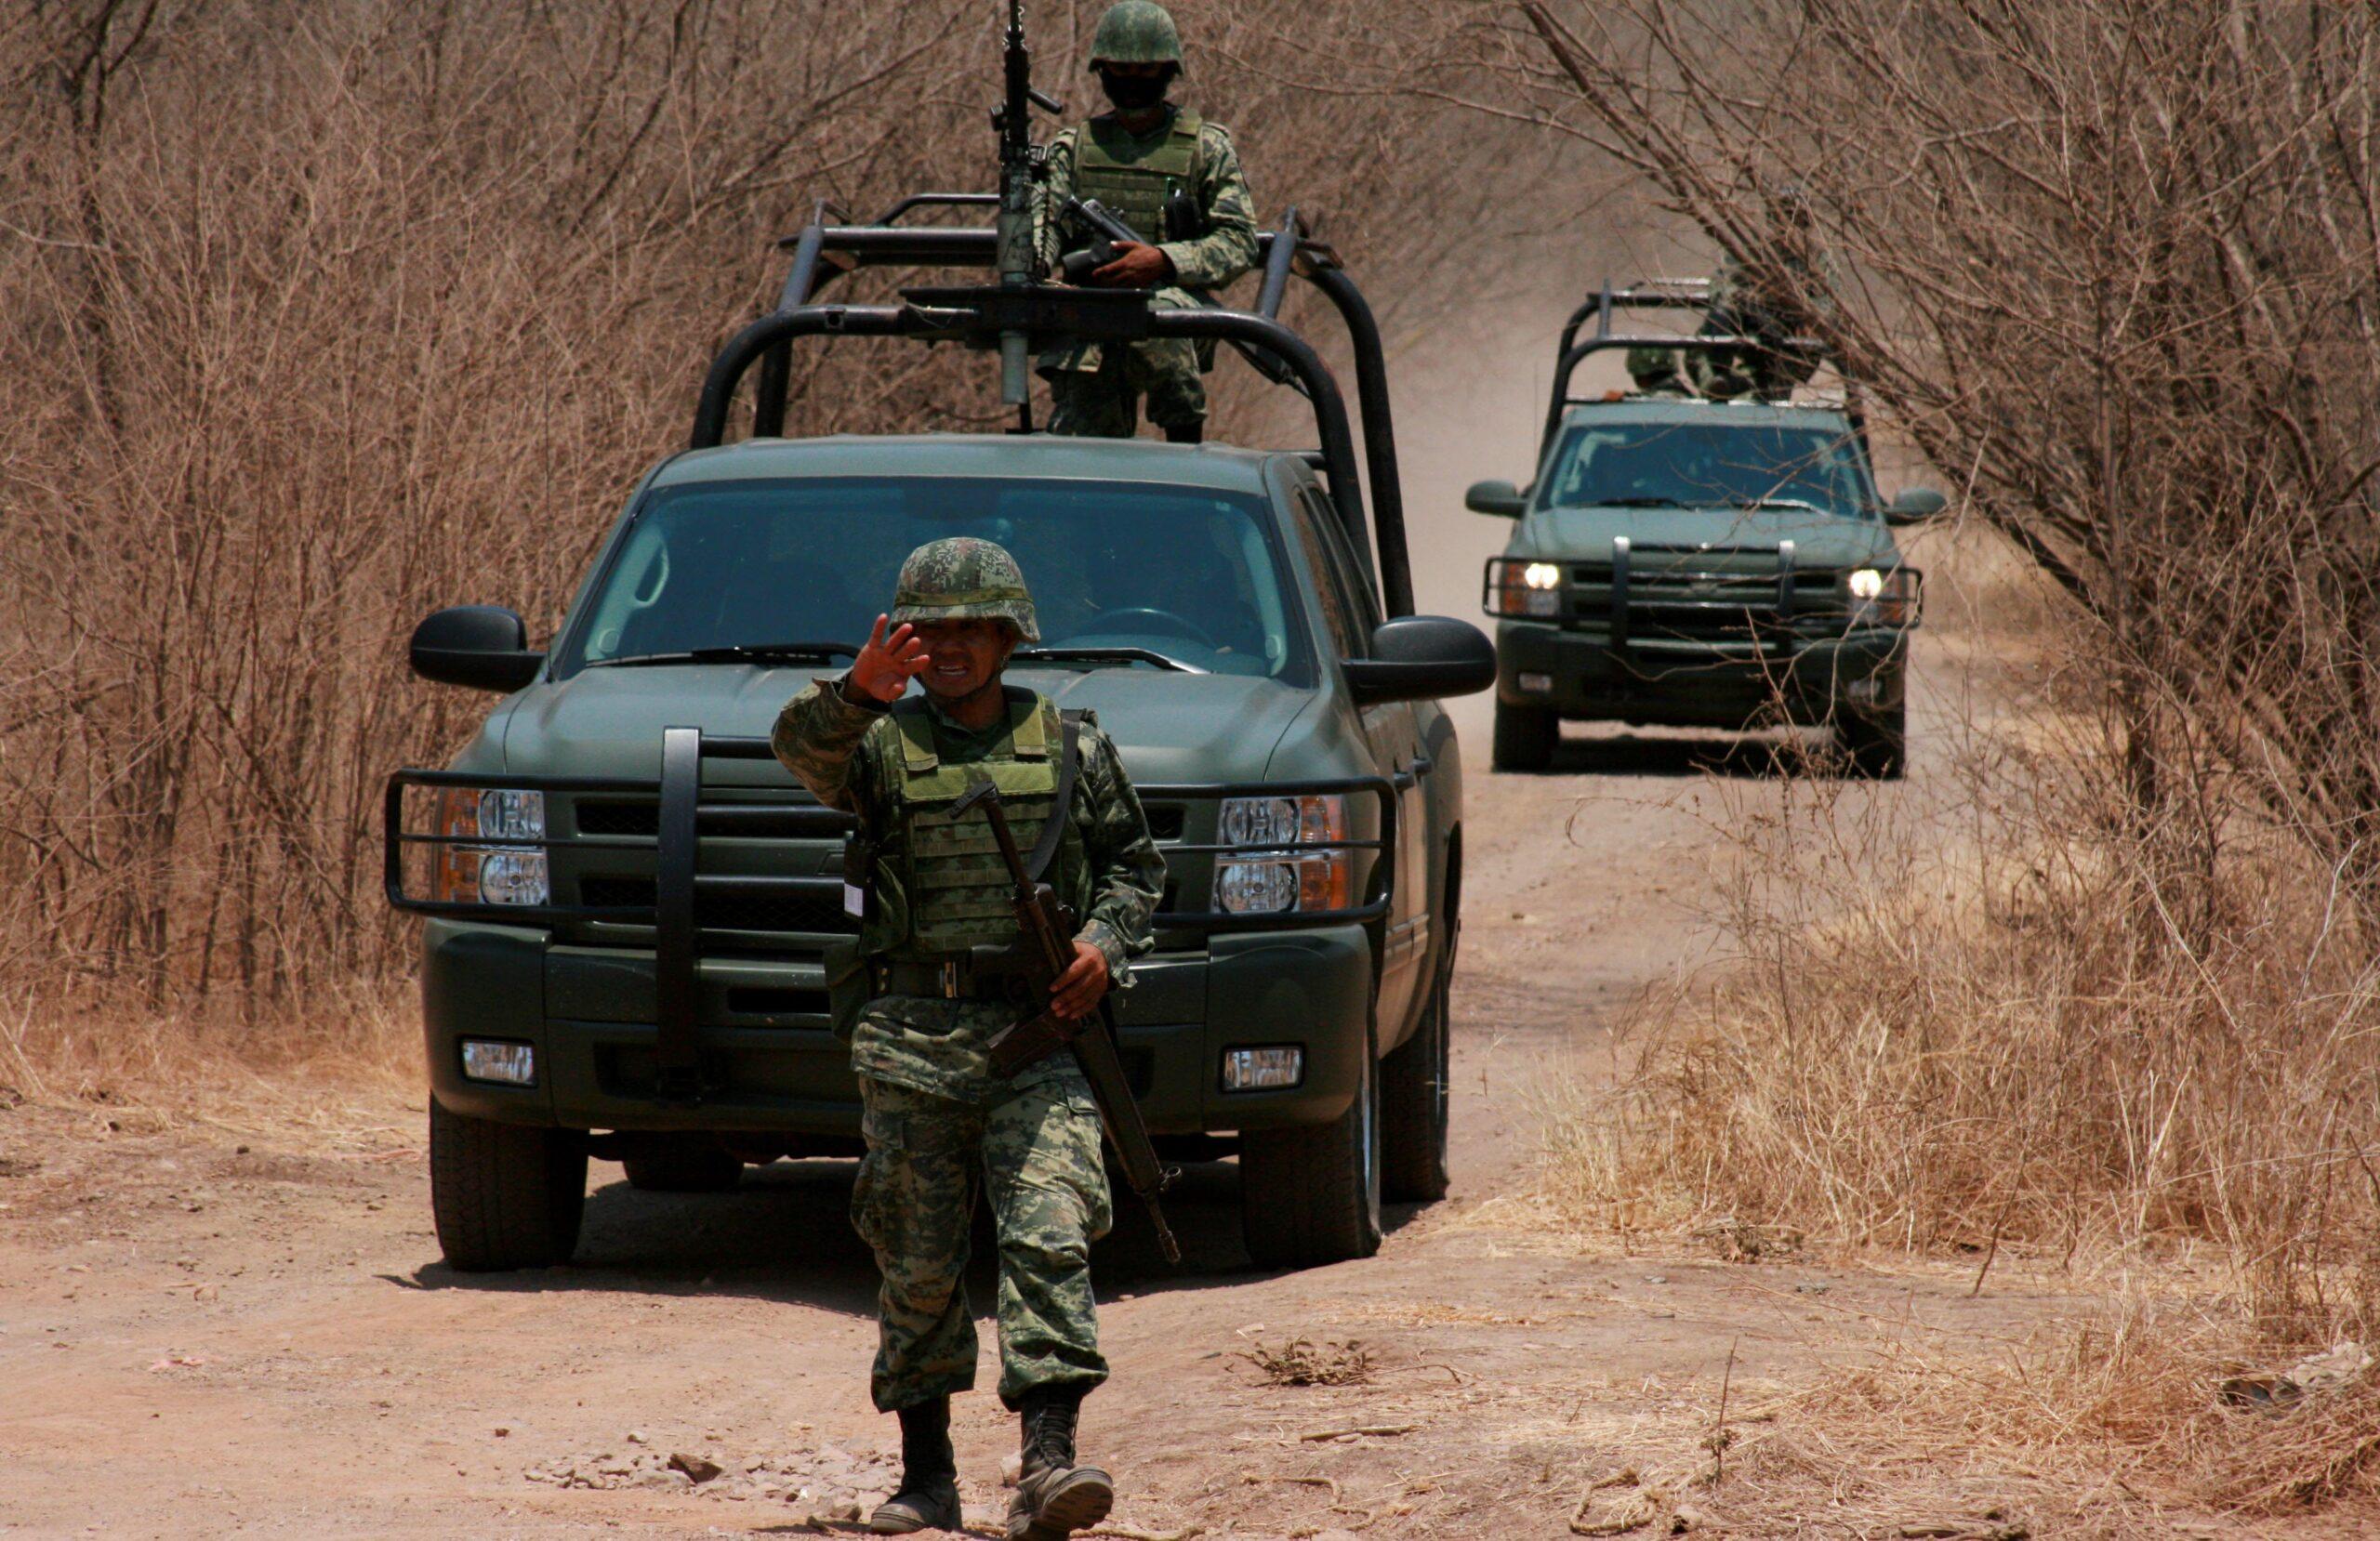 Juez ordena al Ejército abrir cuarteles para que PGR busque a desaparecido en Guanajuato